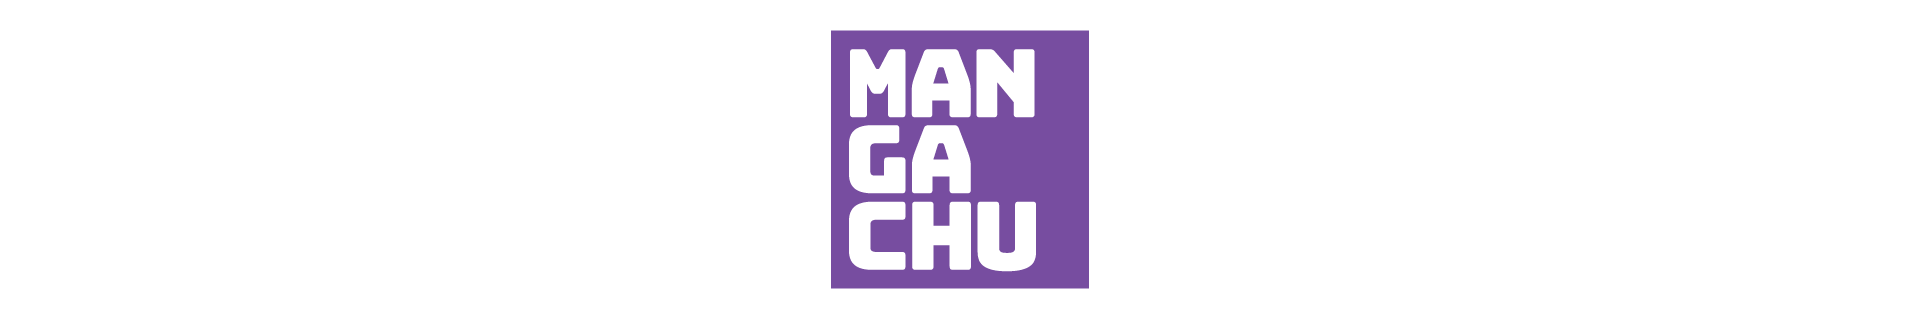 Mangachu branding